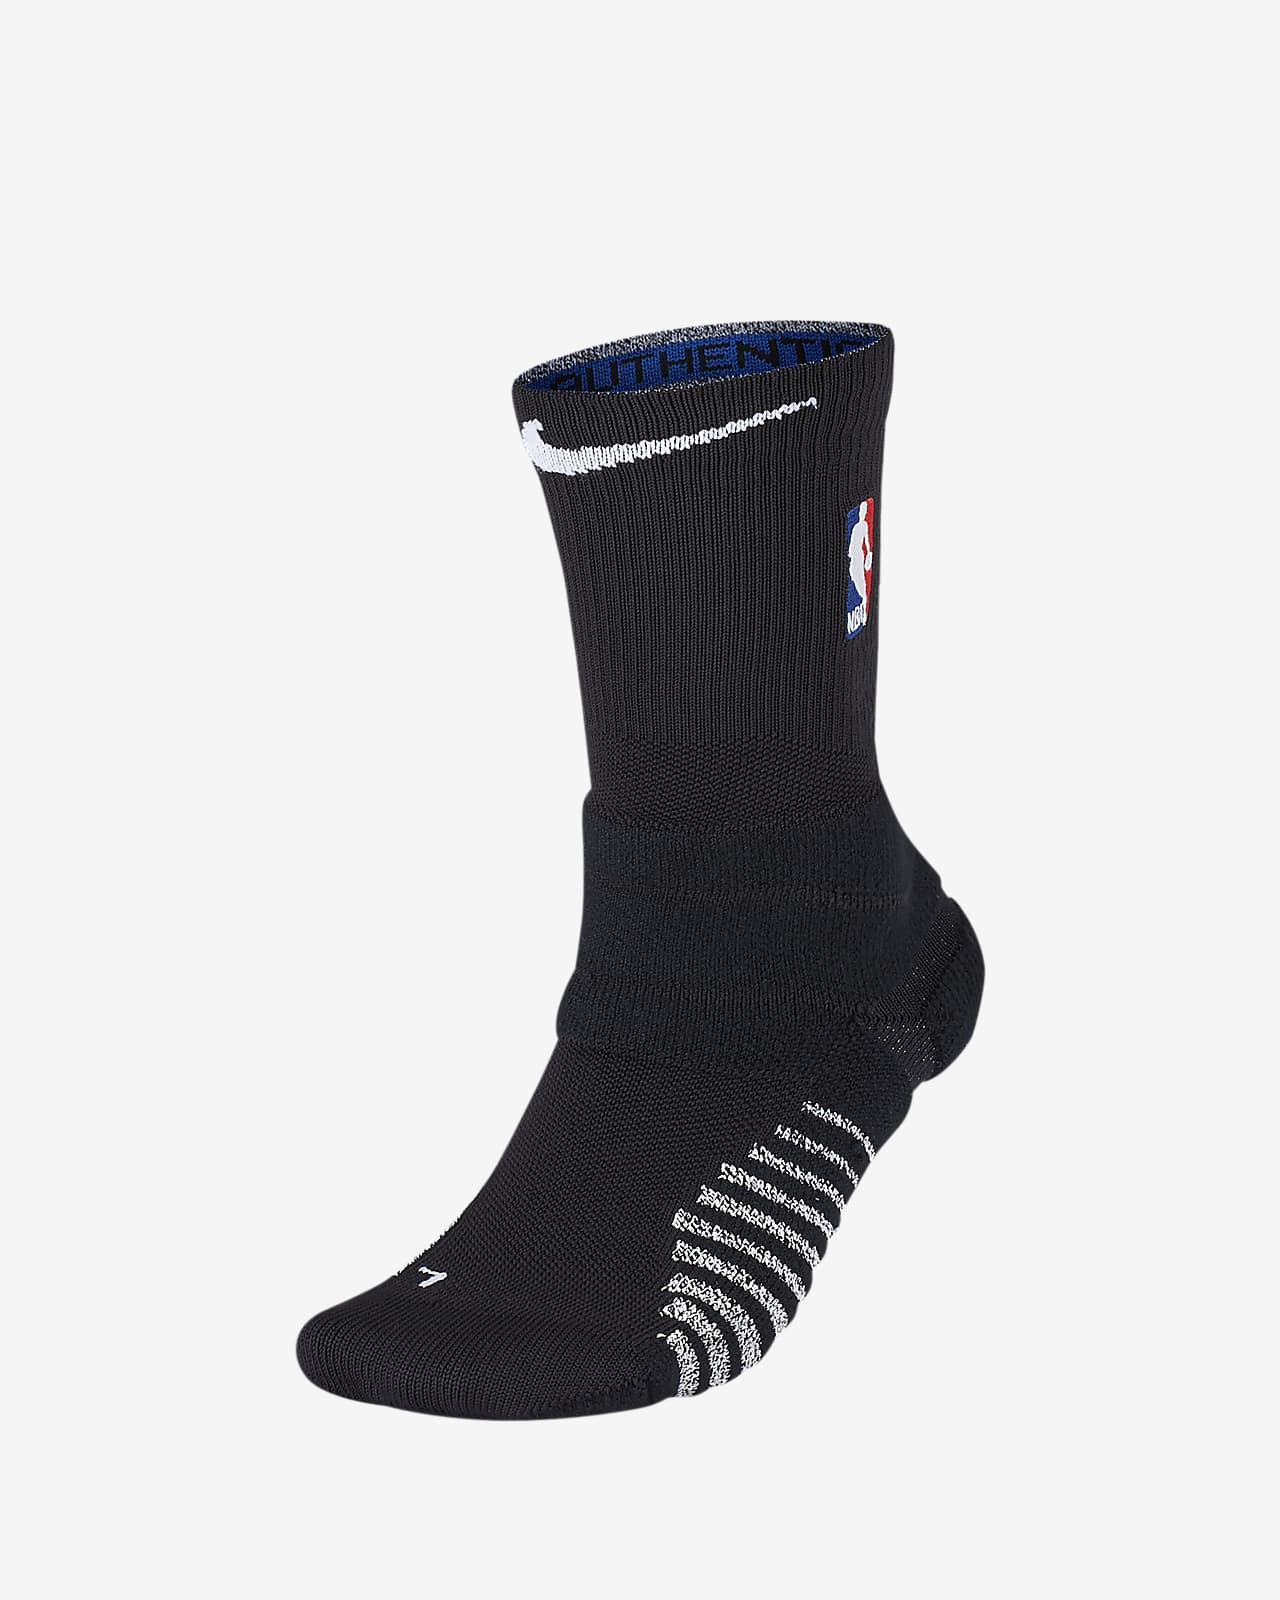 nike grip basketball socks